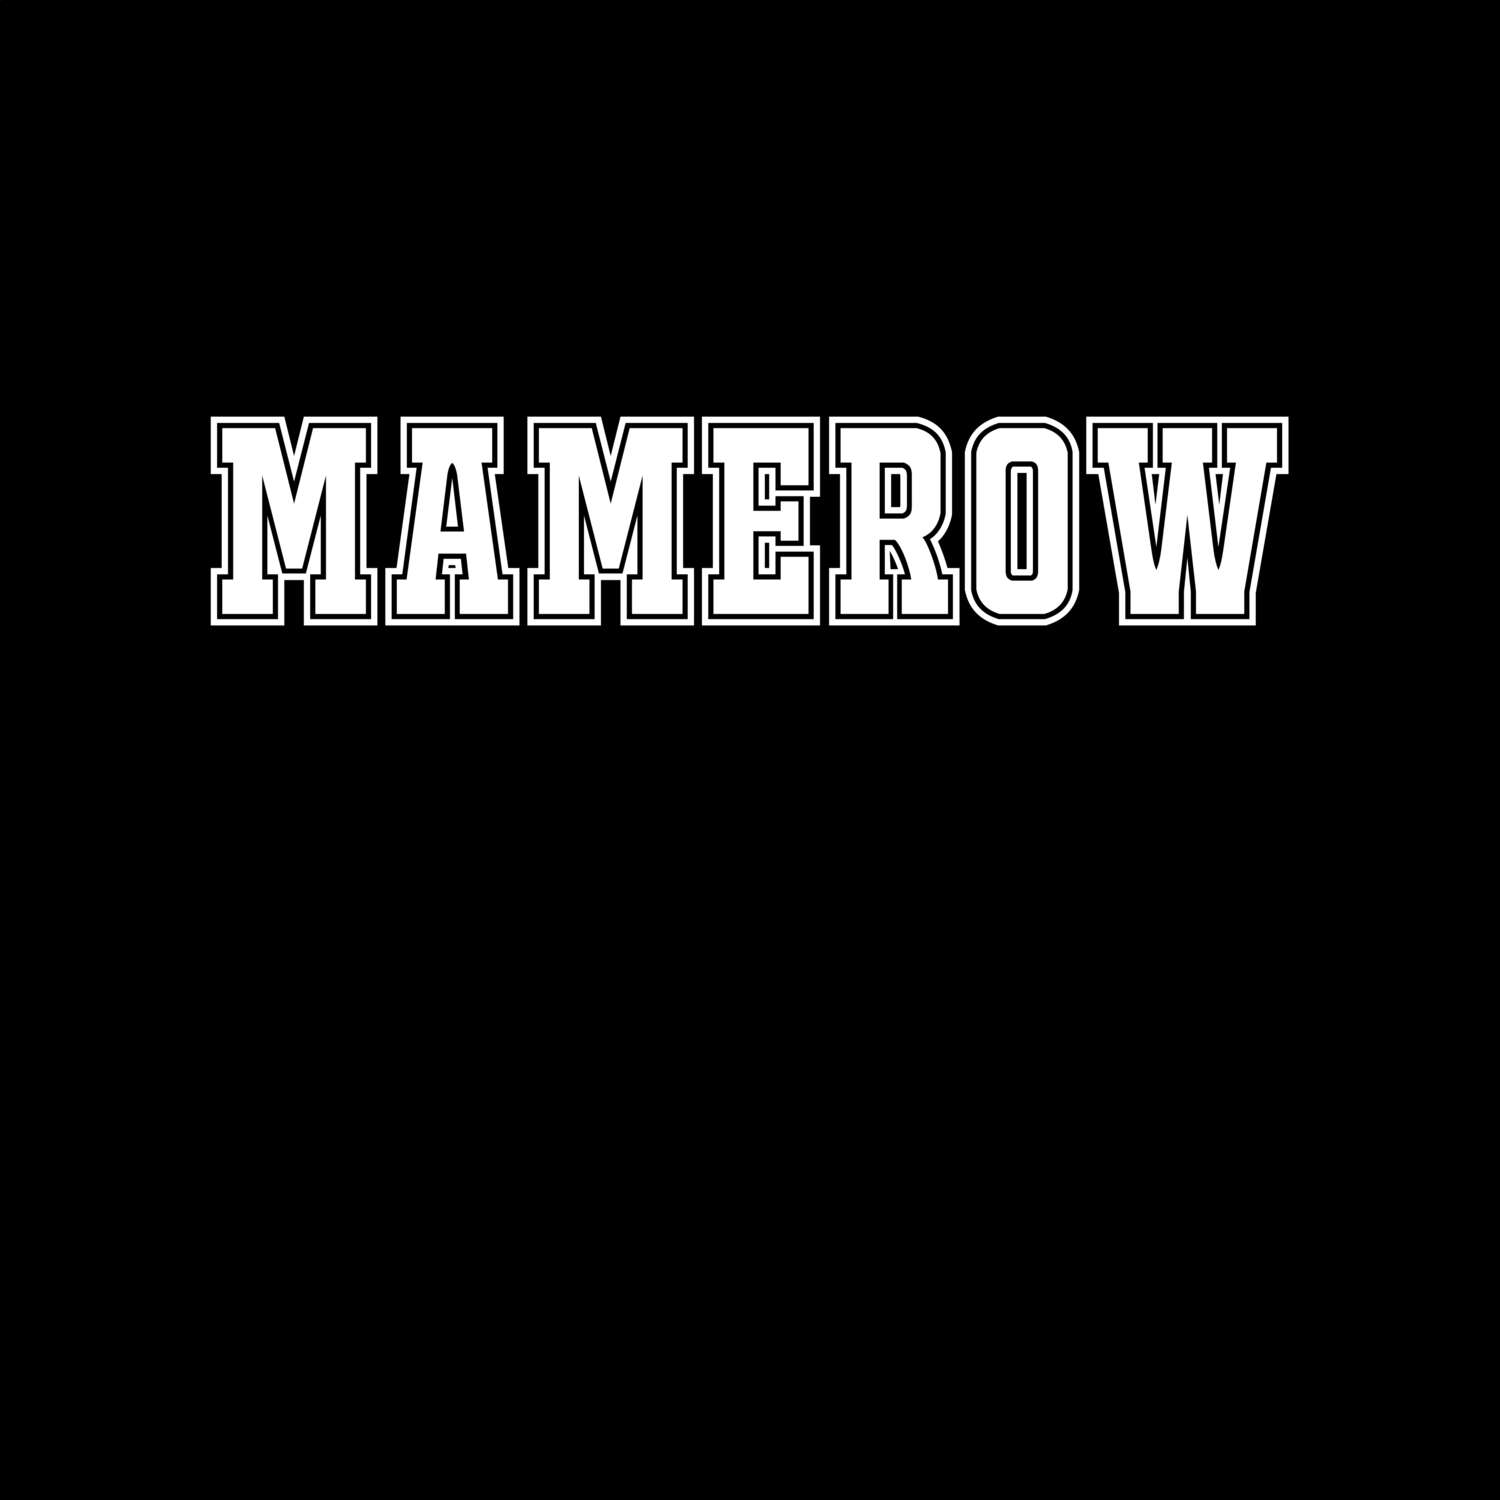 Mamerow T-Shirt »Classic«